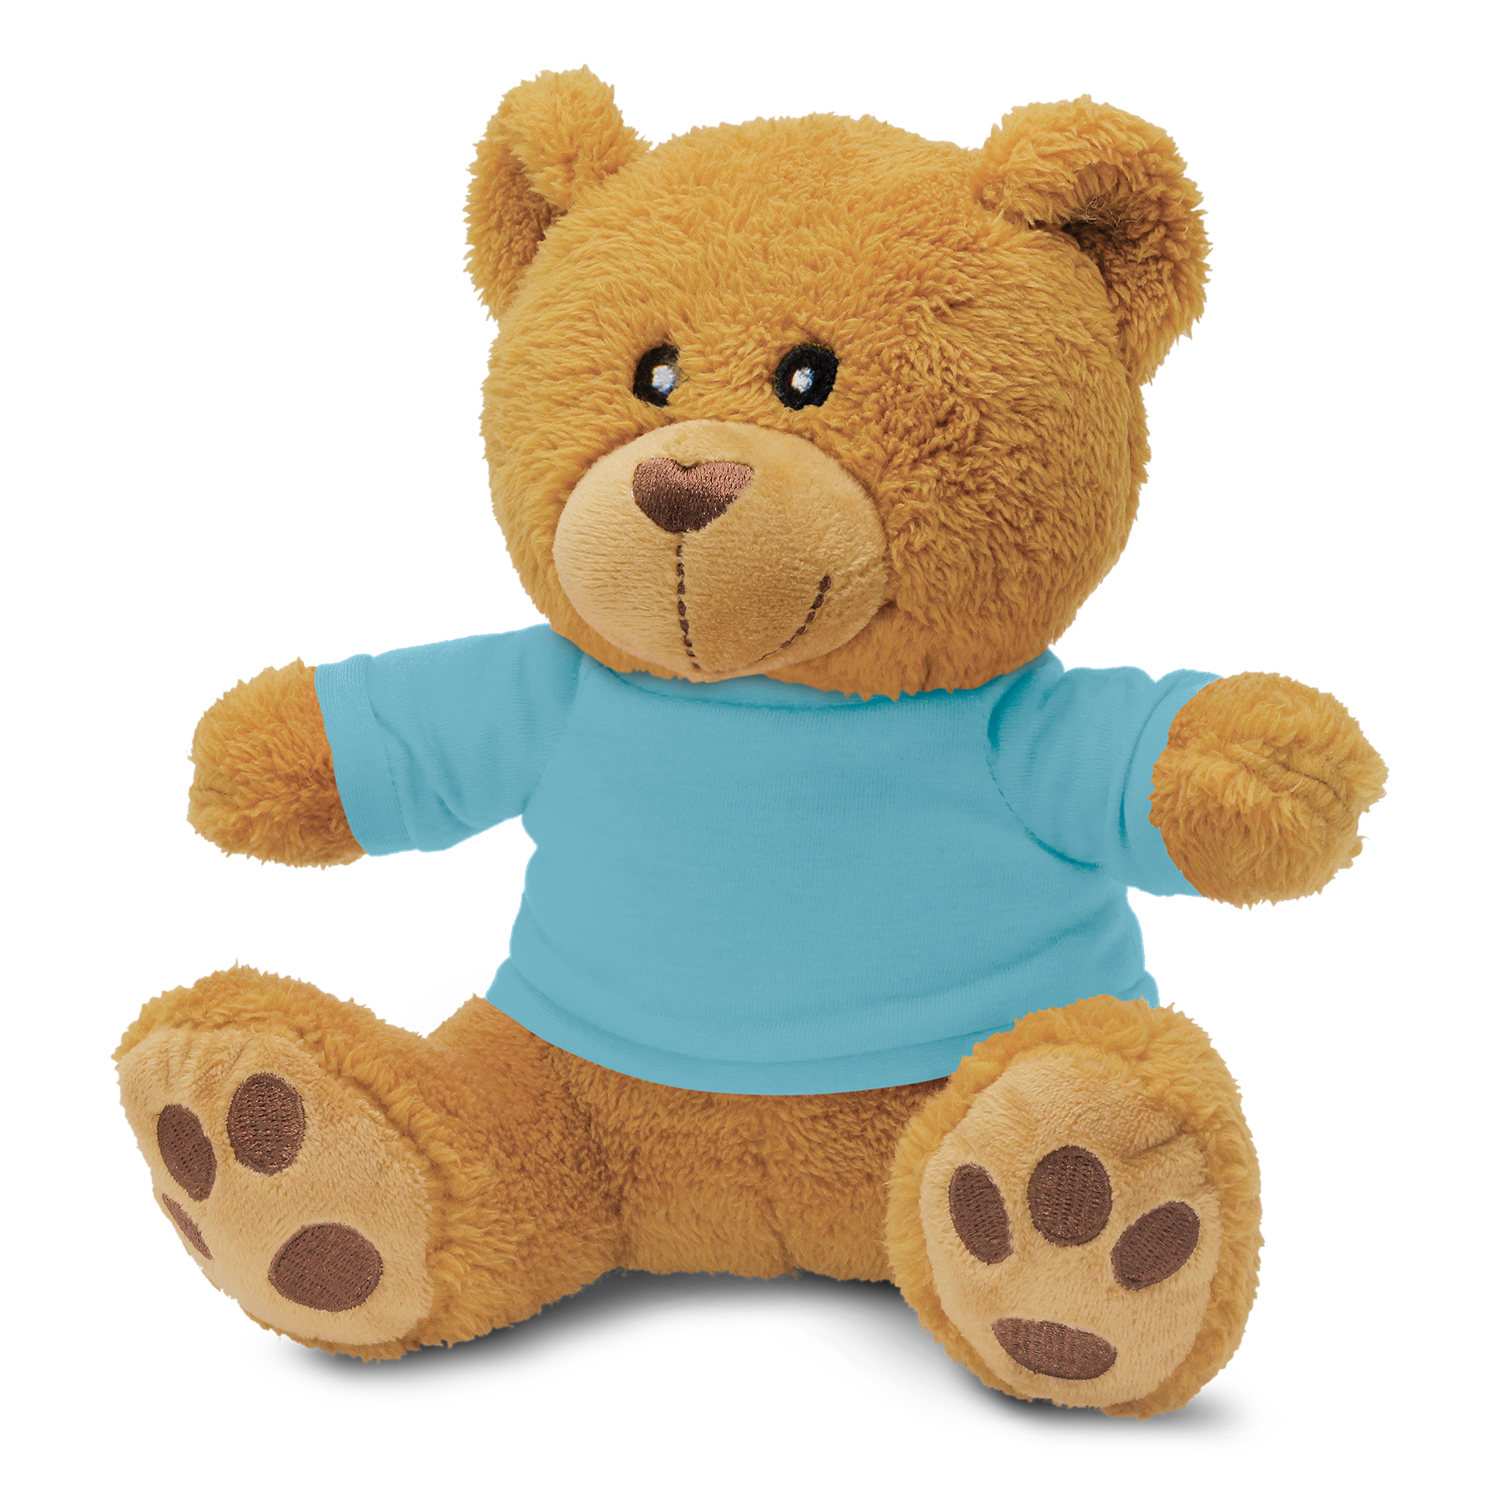 TRENDS | Teddy Bear Plush Toy